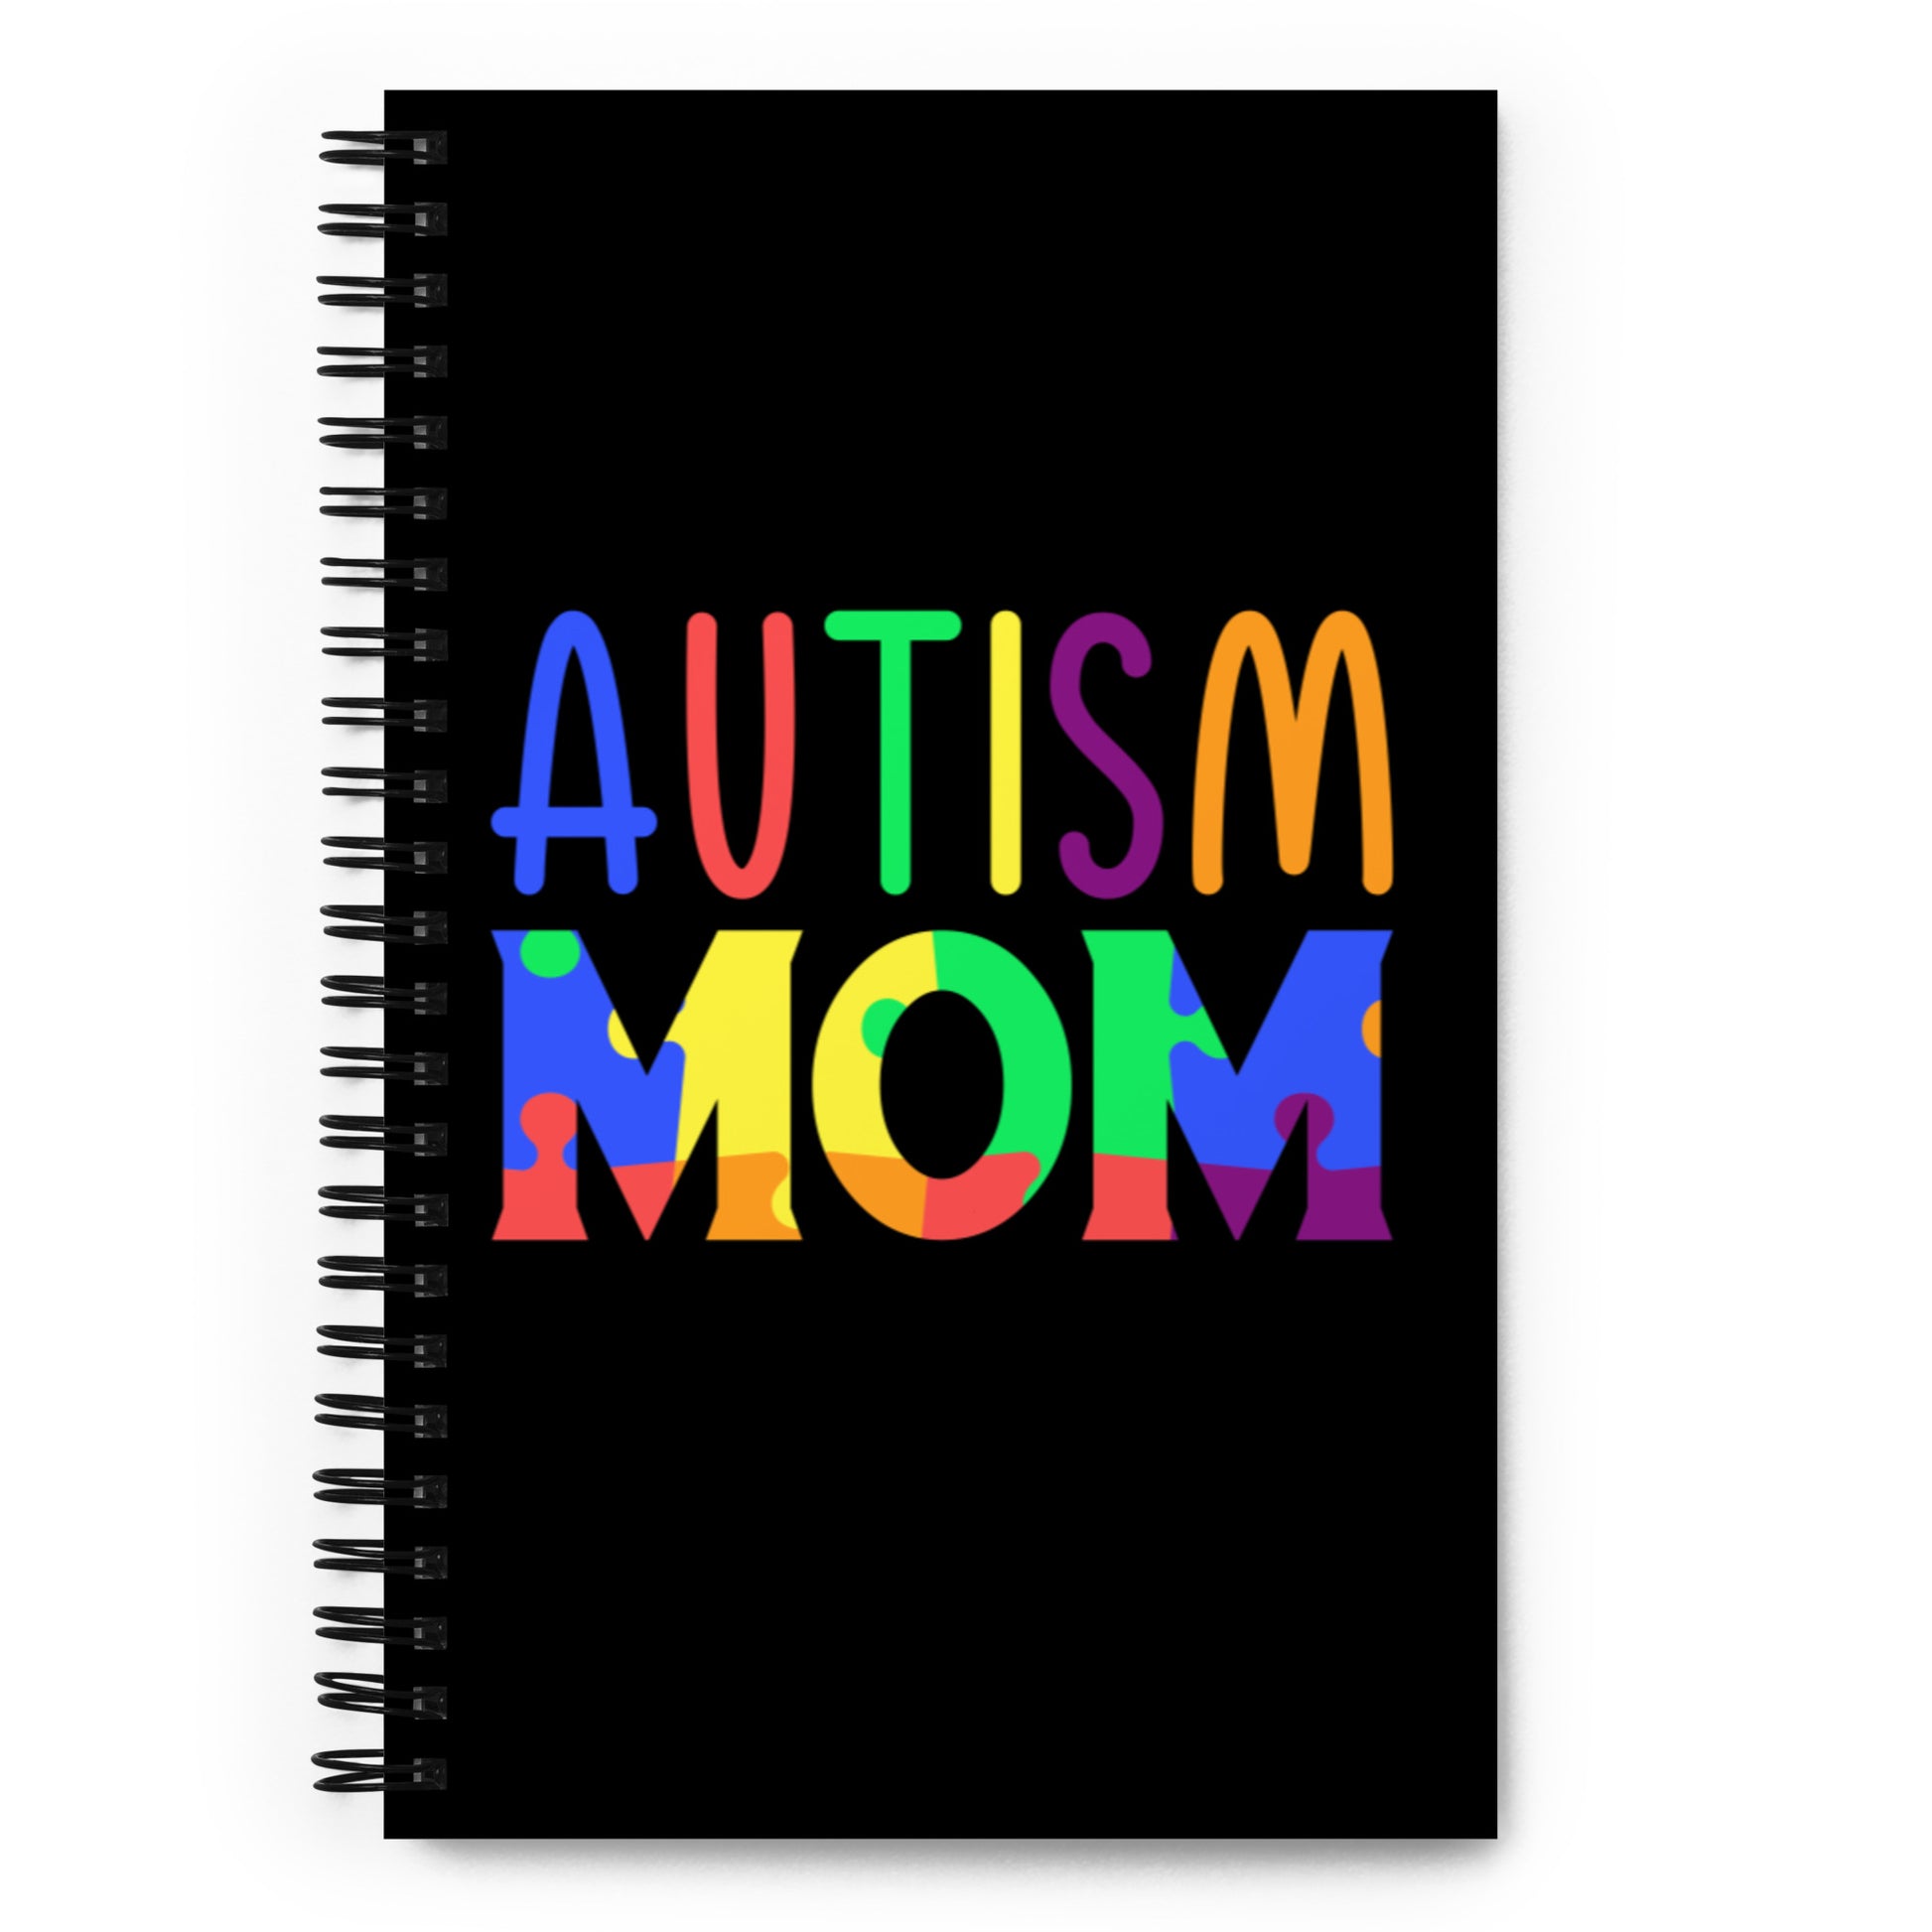 Autism Mom Spiral Journal Notebook Black